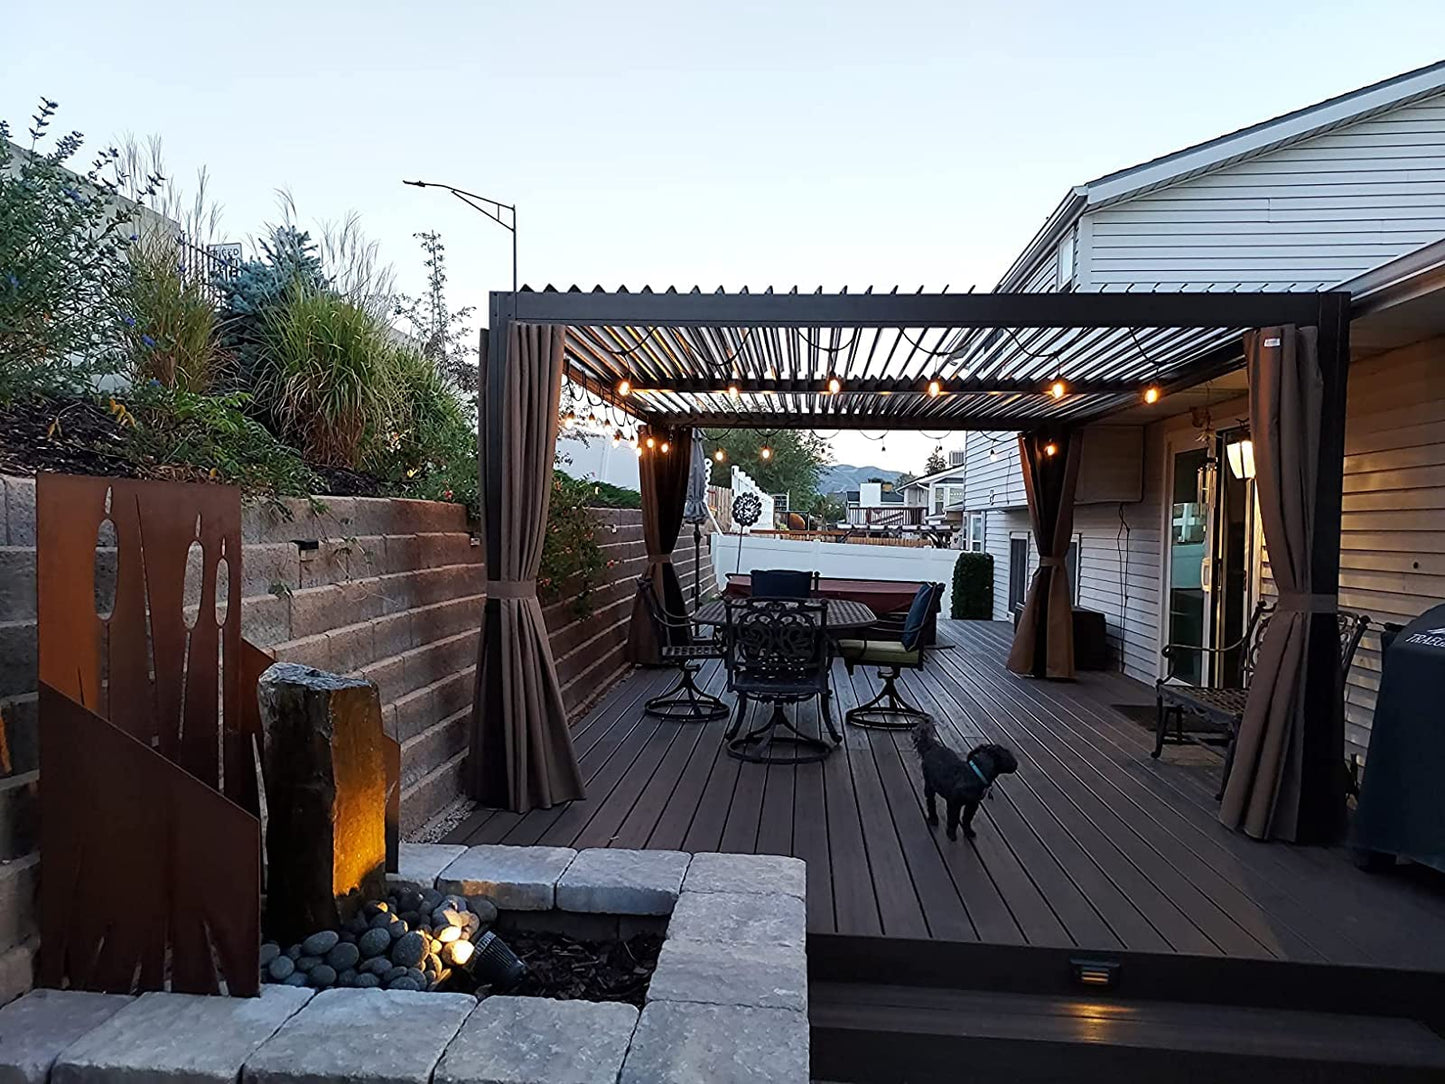 Domi Louvered Pergola 12' × 20', Outdoor Aluminium Pergola with Adjustable Roof, Curtains and Netting, Hardtop Gazebo for Patio, Deck, Garden, Yard, Beach(Gray)